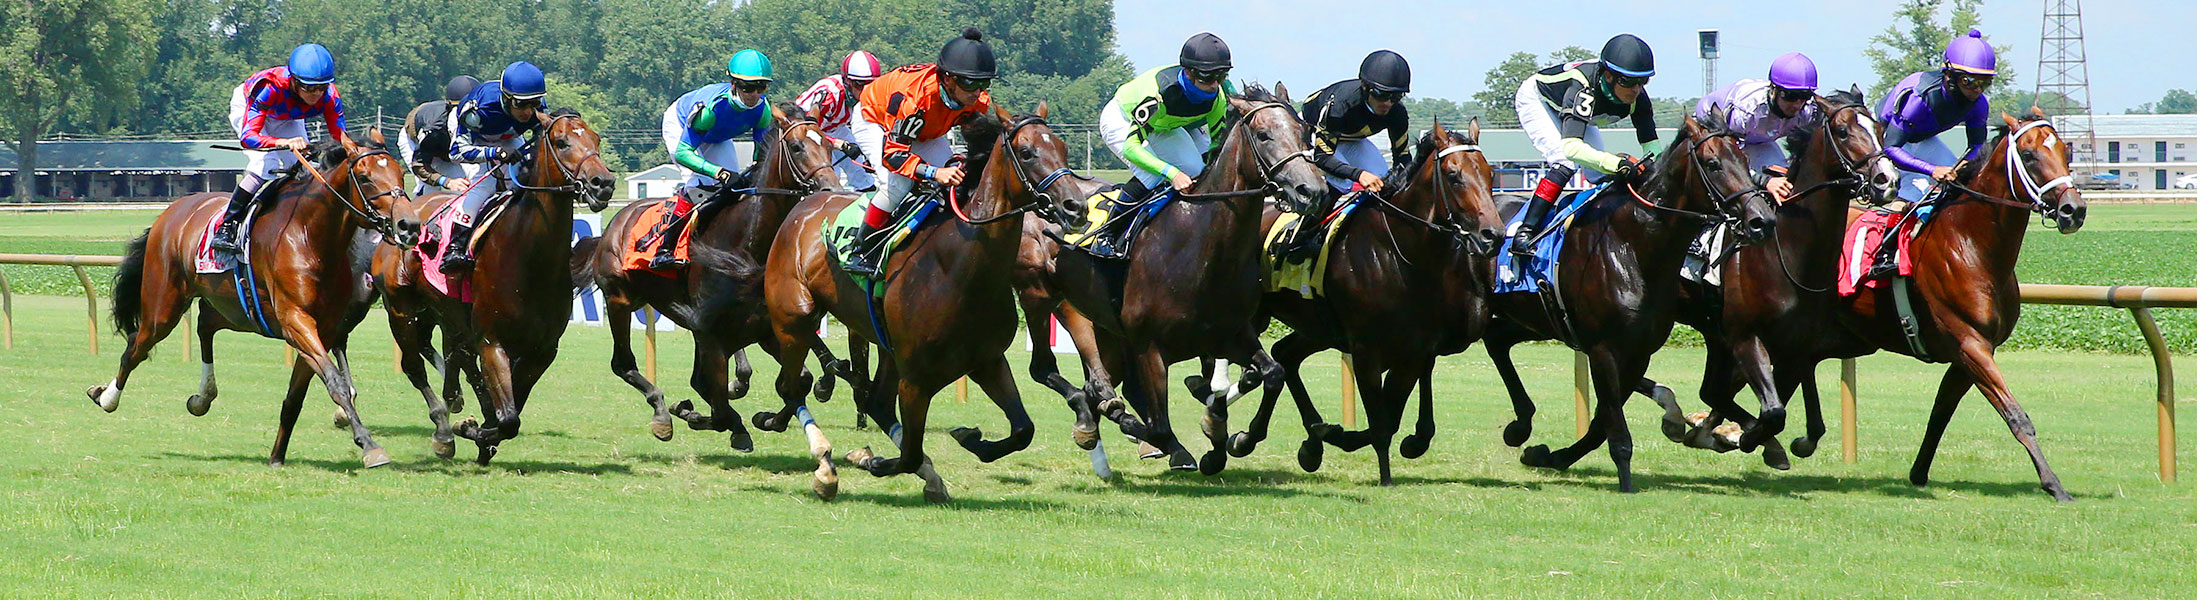 group of horses and their jockeys racing